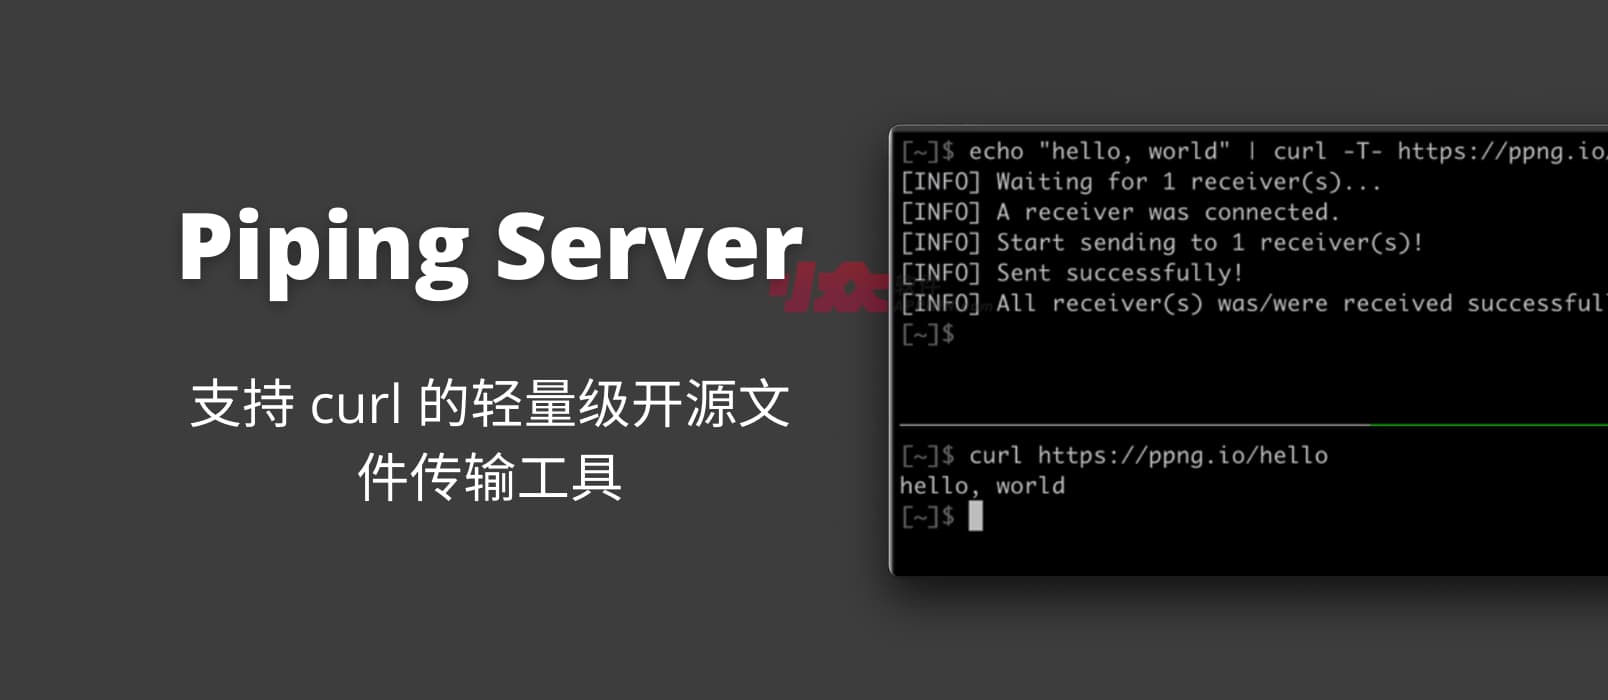 Piping Server - 支持 curl 的轻量级开源文件传输工具